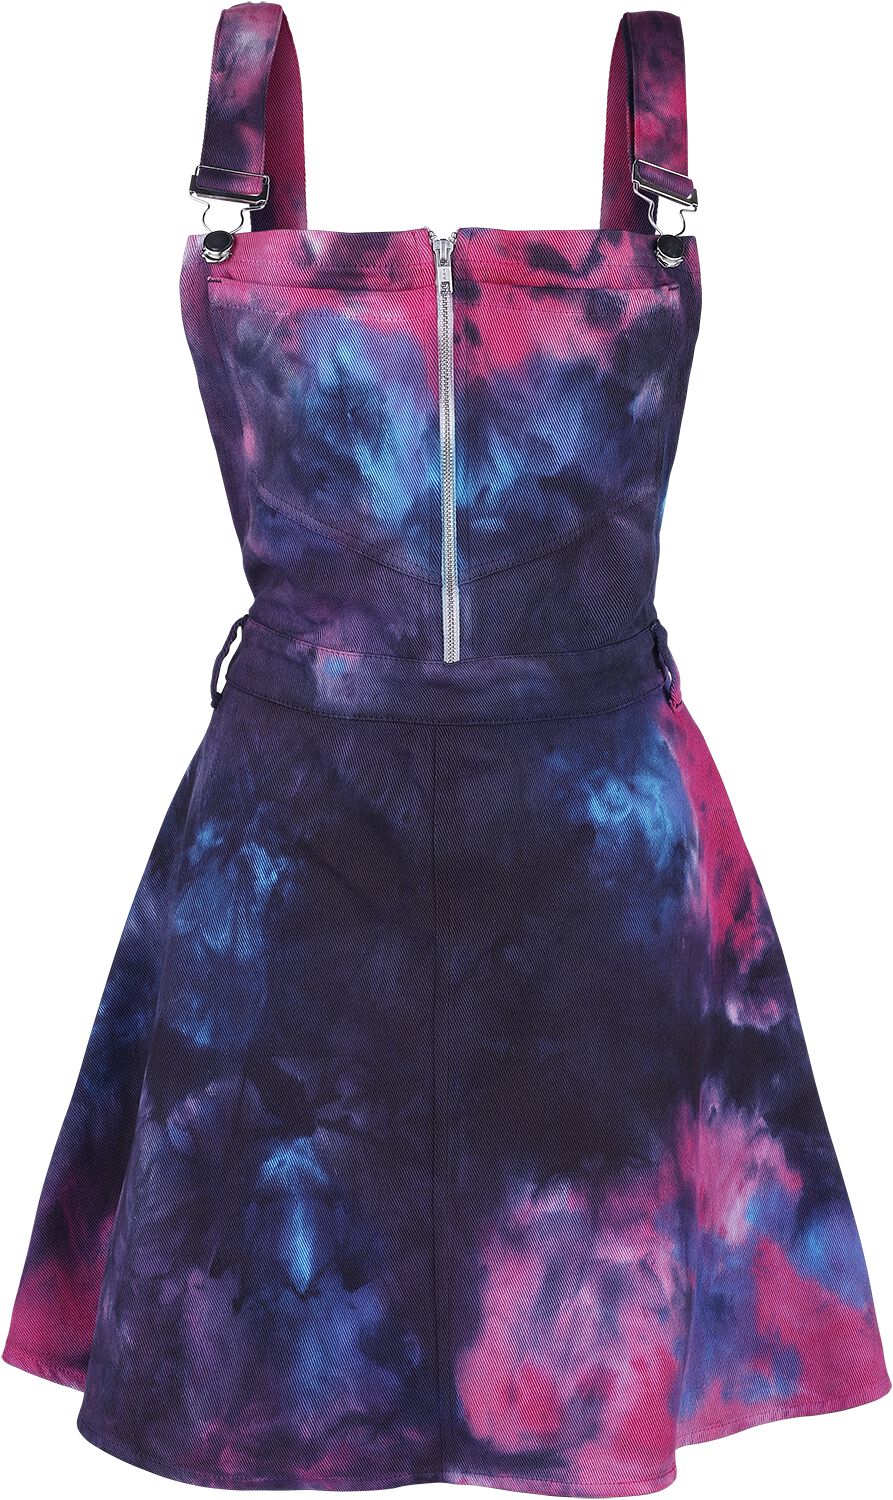 Heartless Monet Pinafore Dress Kurzes Kleid multicolor in XL